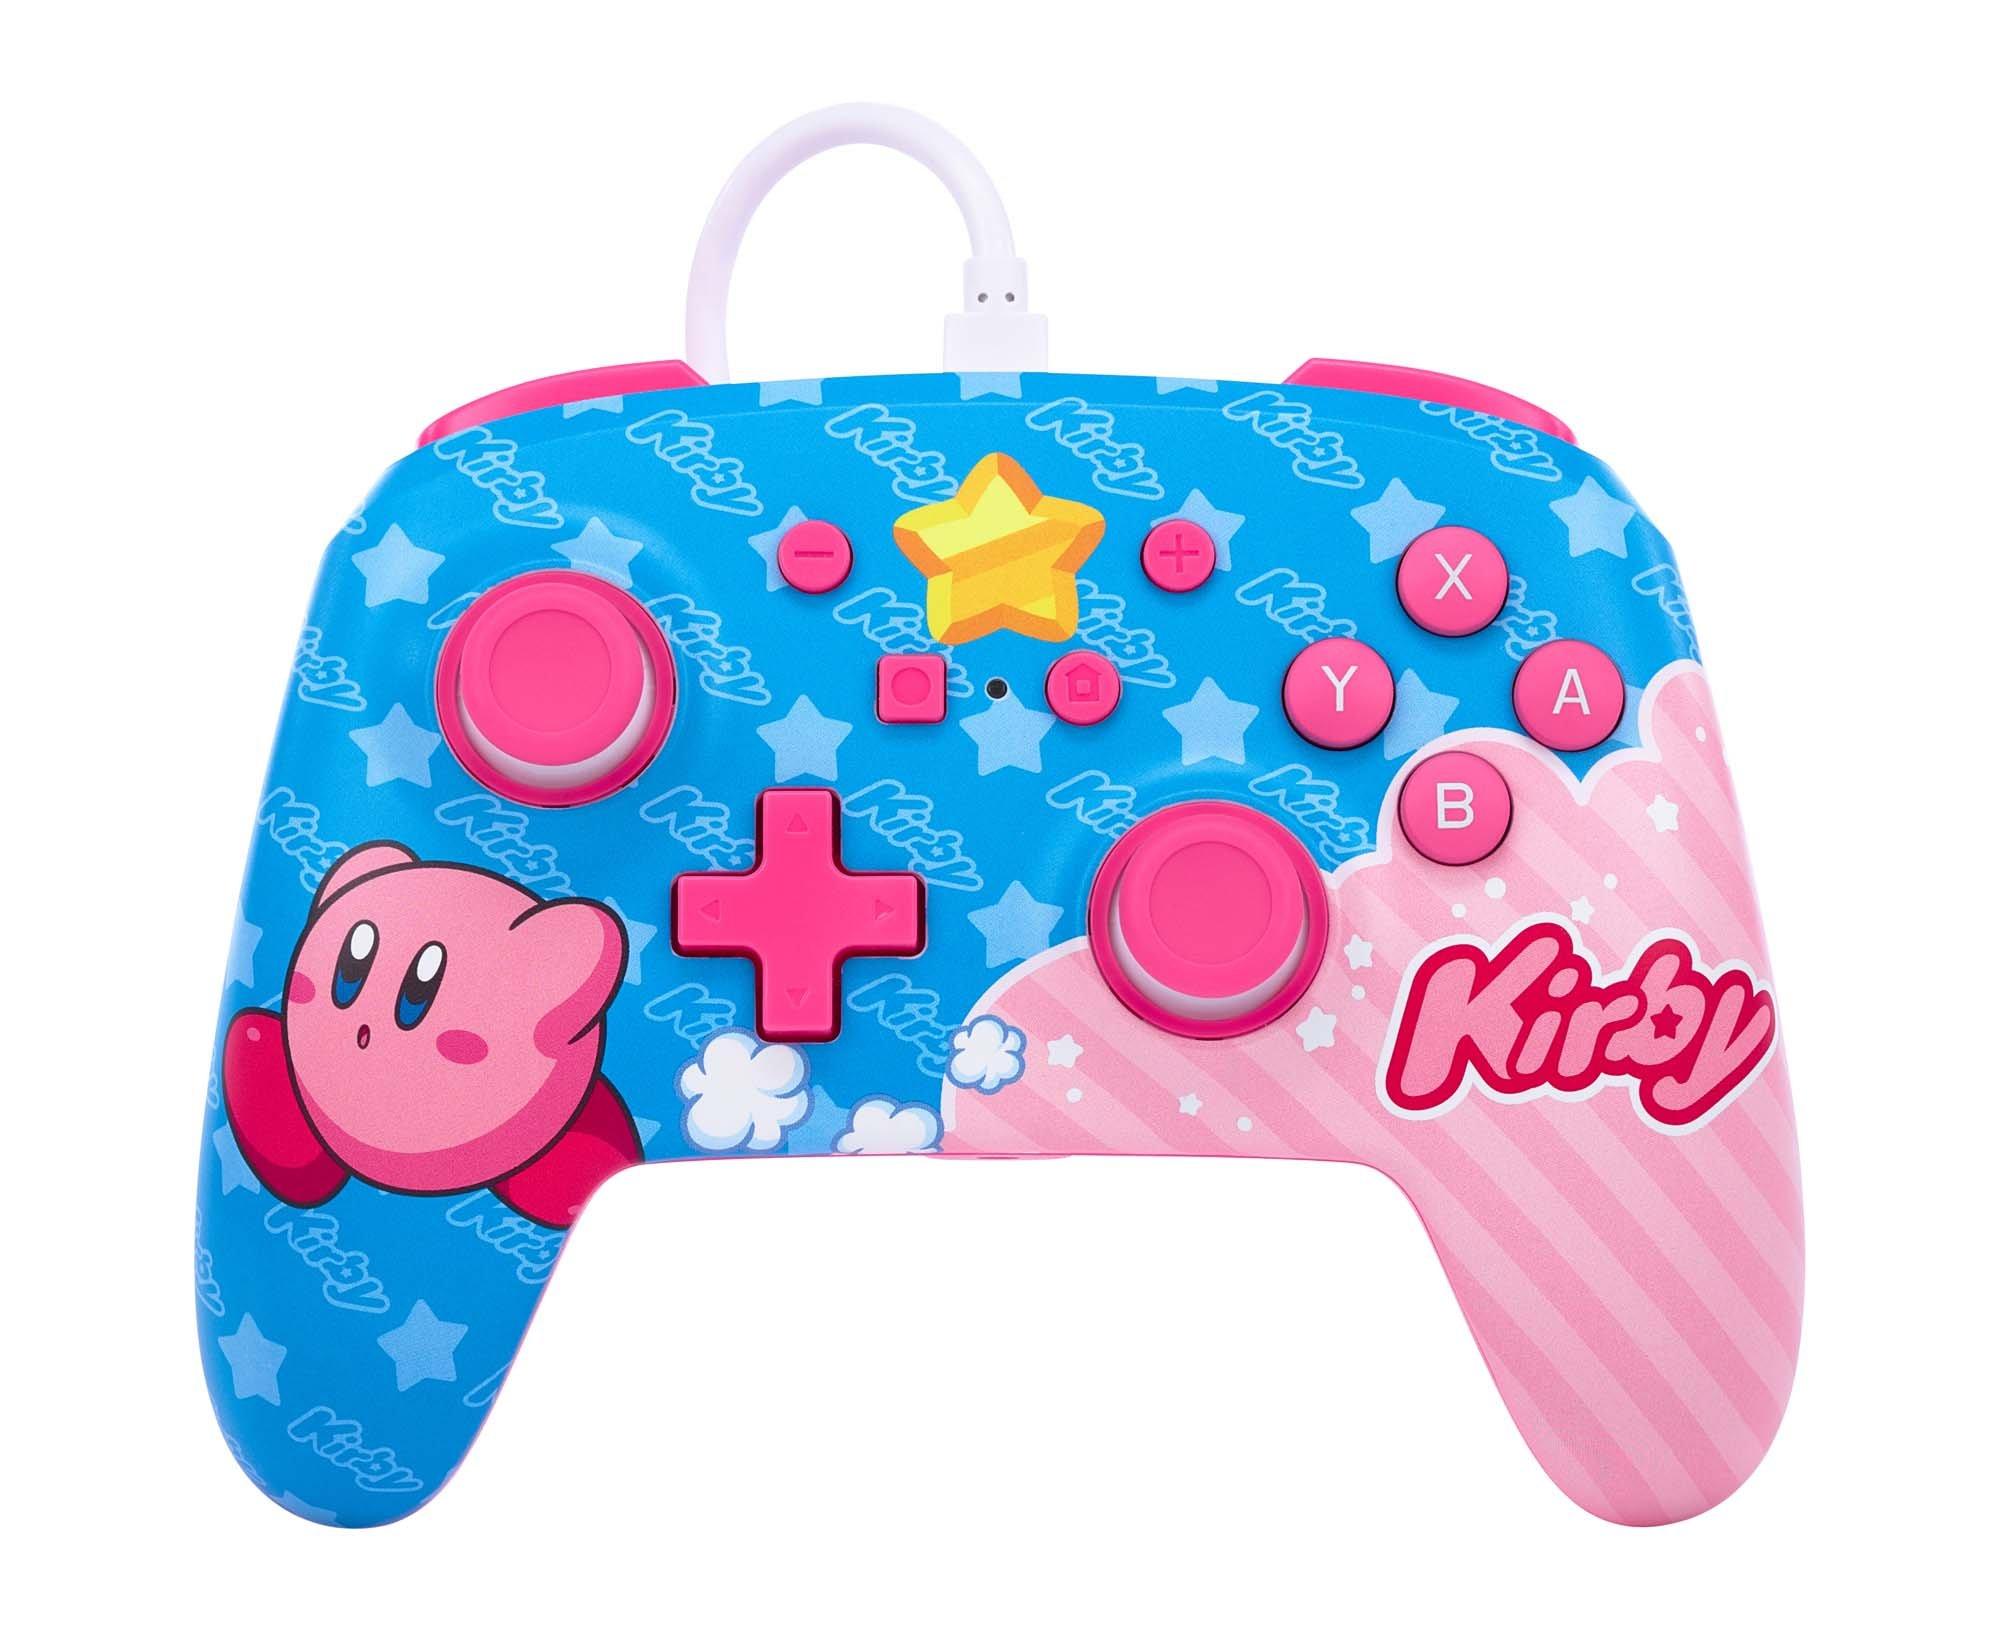 Enhanced Controller Nintendo Switch - Kirby | GameStop